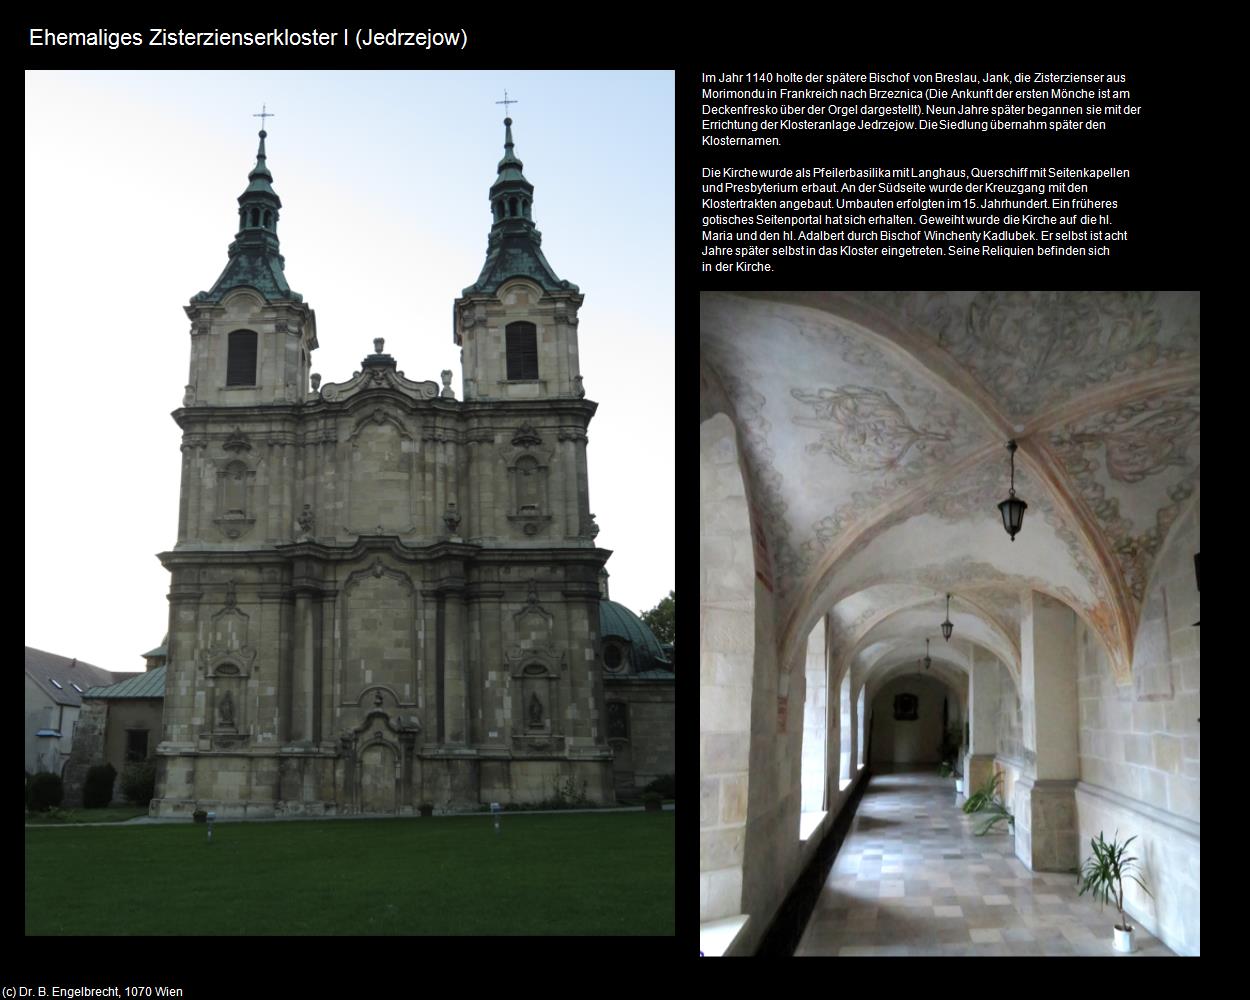 Ehem. Zisterzienserkloster I (Jedrzejow) in POLEN-Galizien